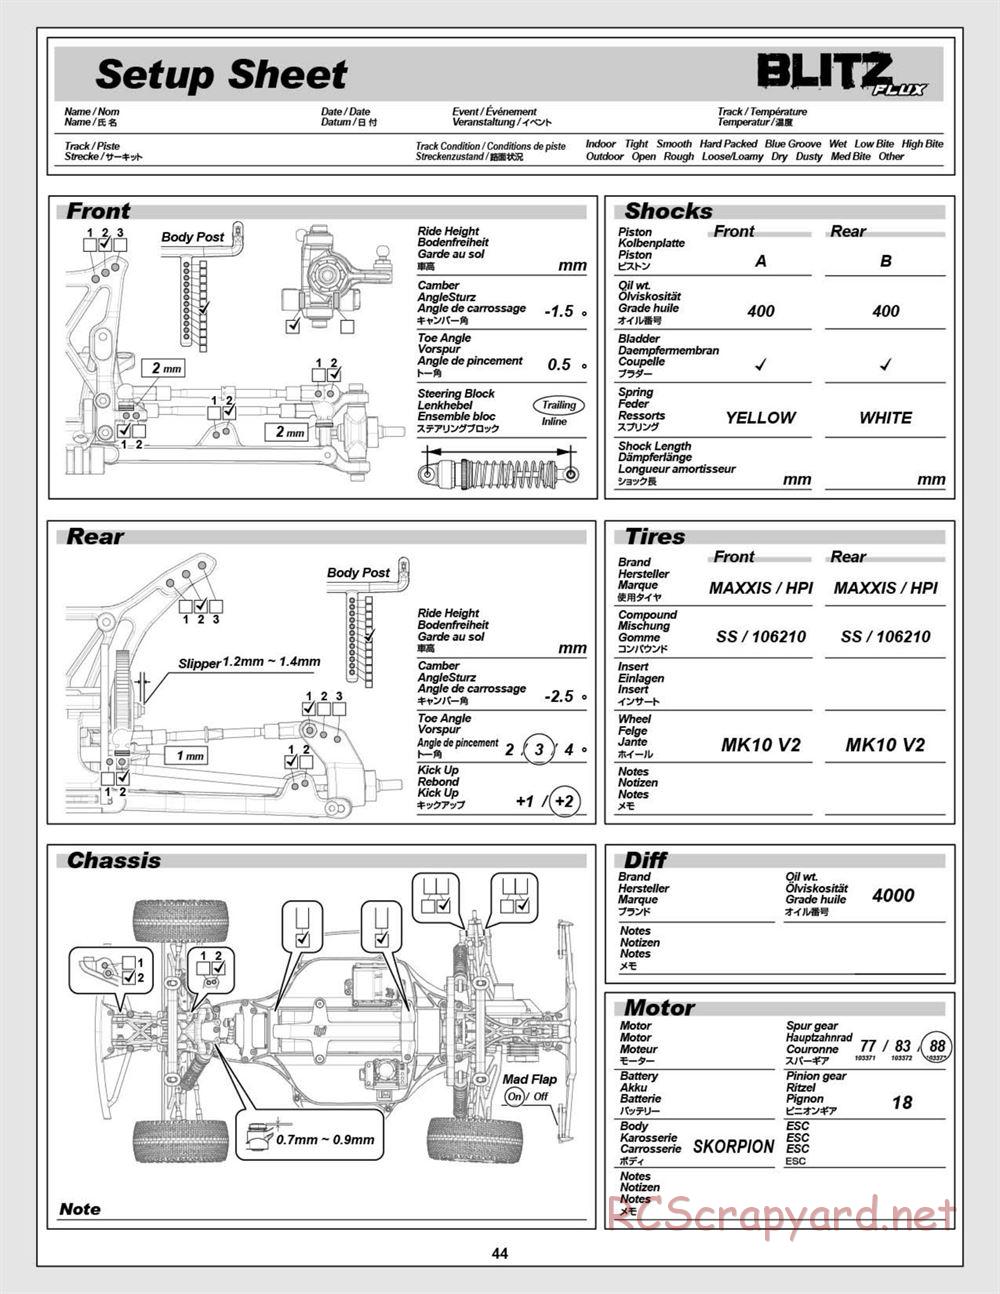 HPI - Blitz Flux - Manual - Page 44